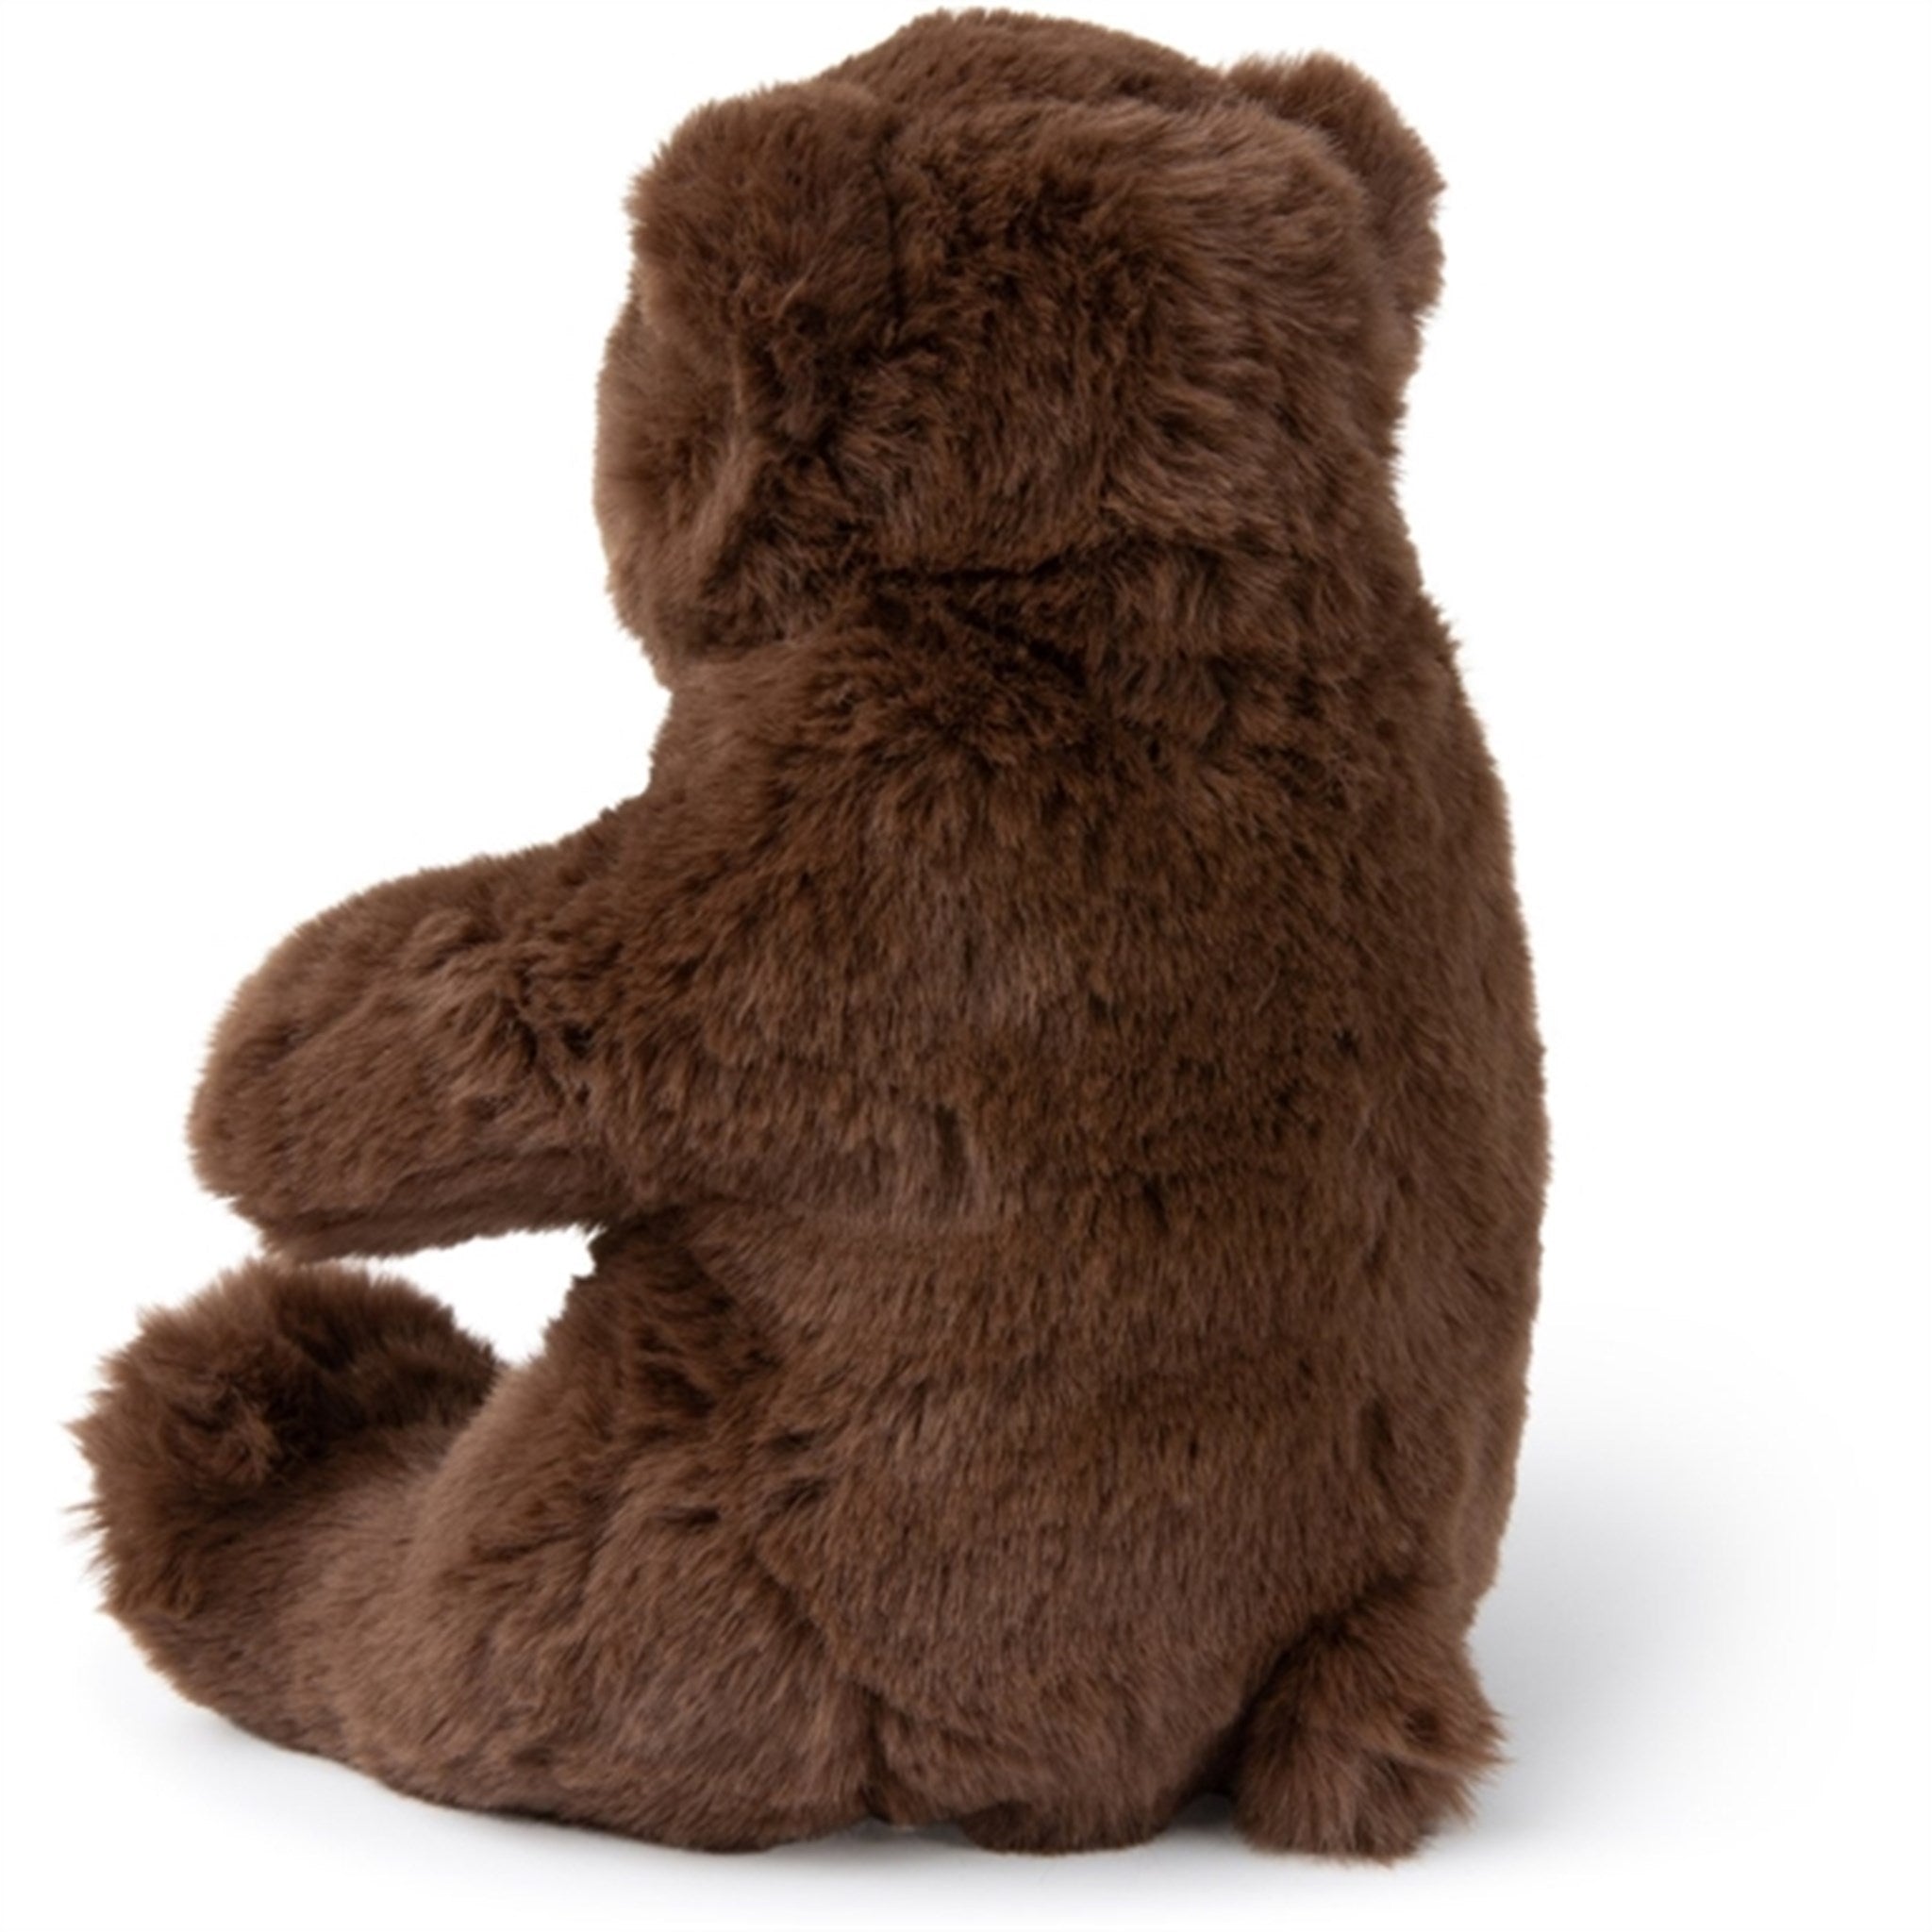 Bon Ton Toys WWF Plush ECO Grizzly Bear Brown 25 cm 3